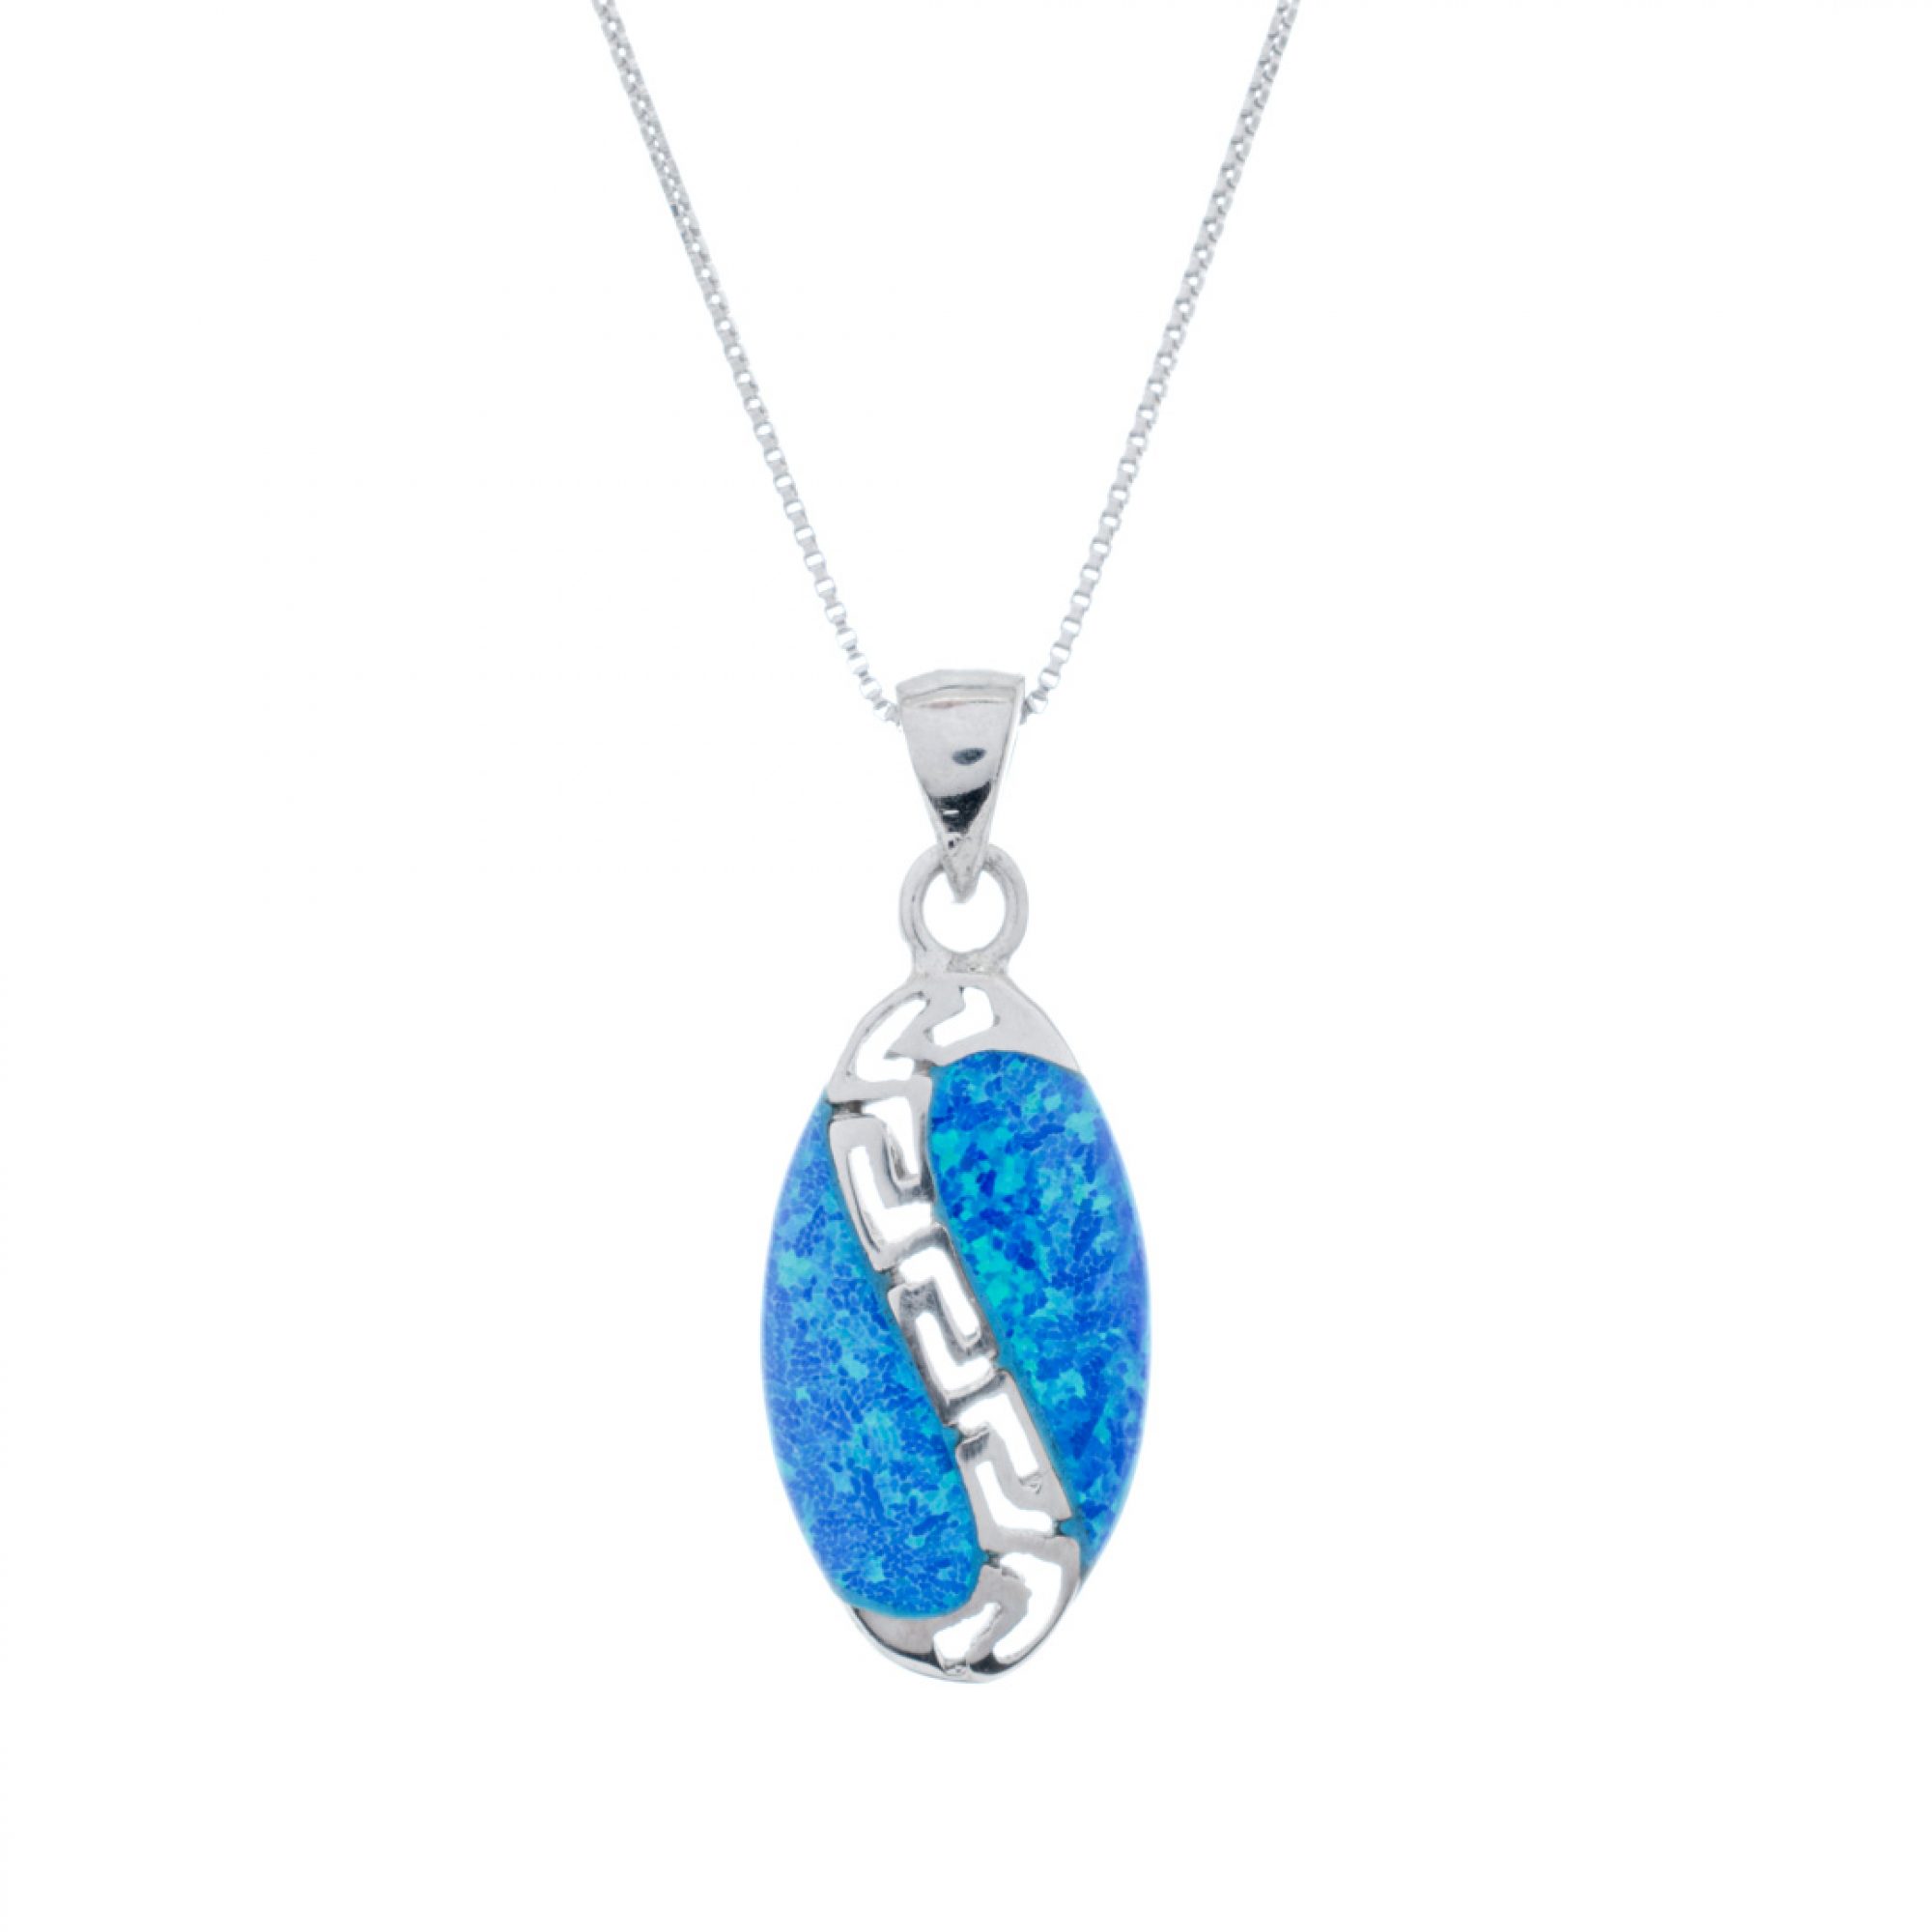 Opal meander pendant